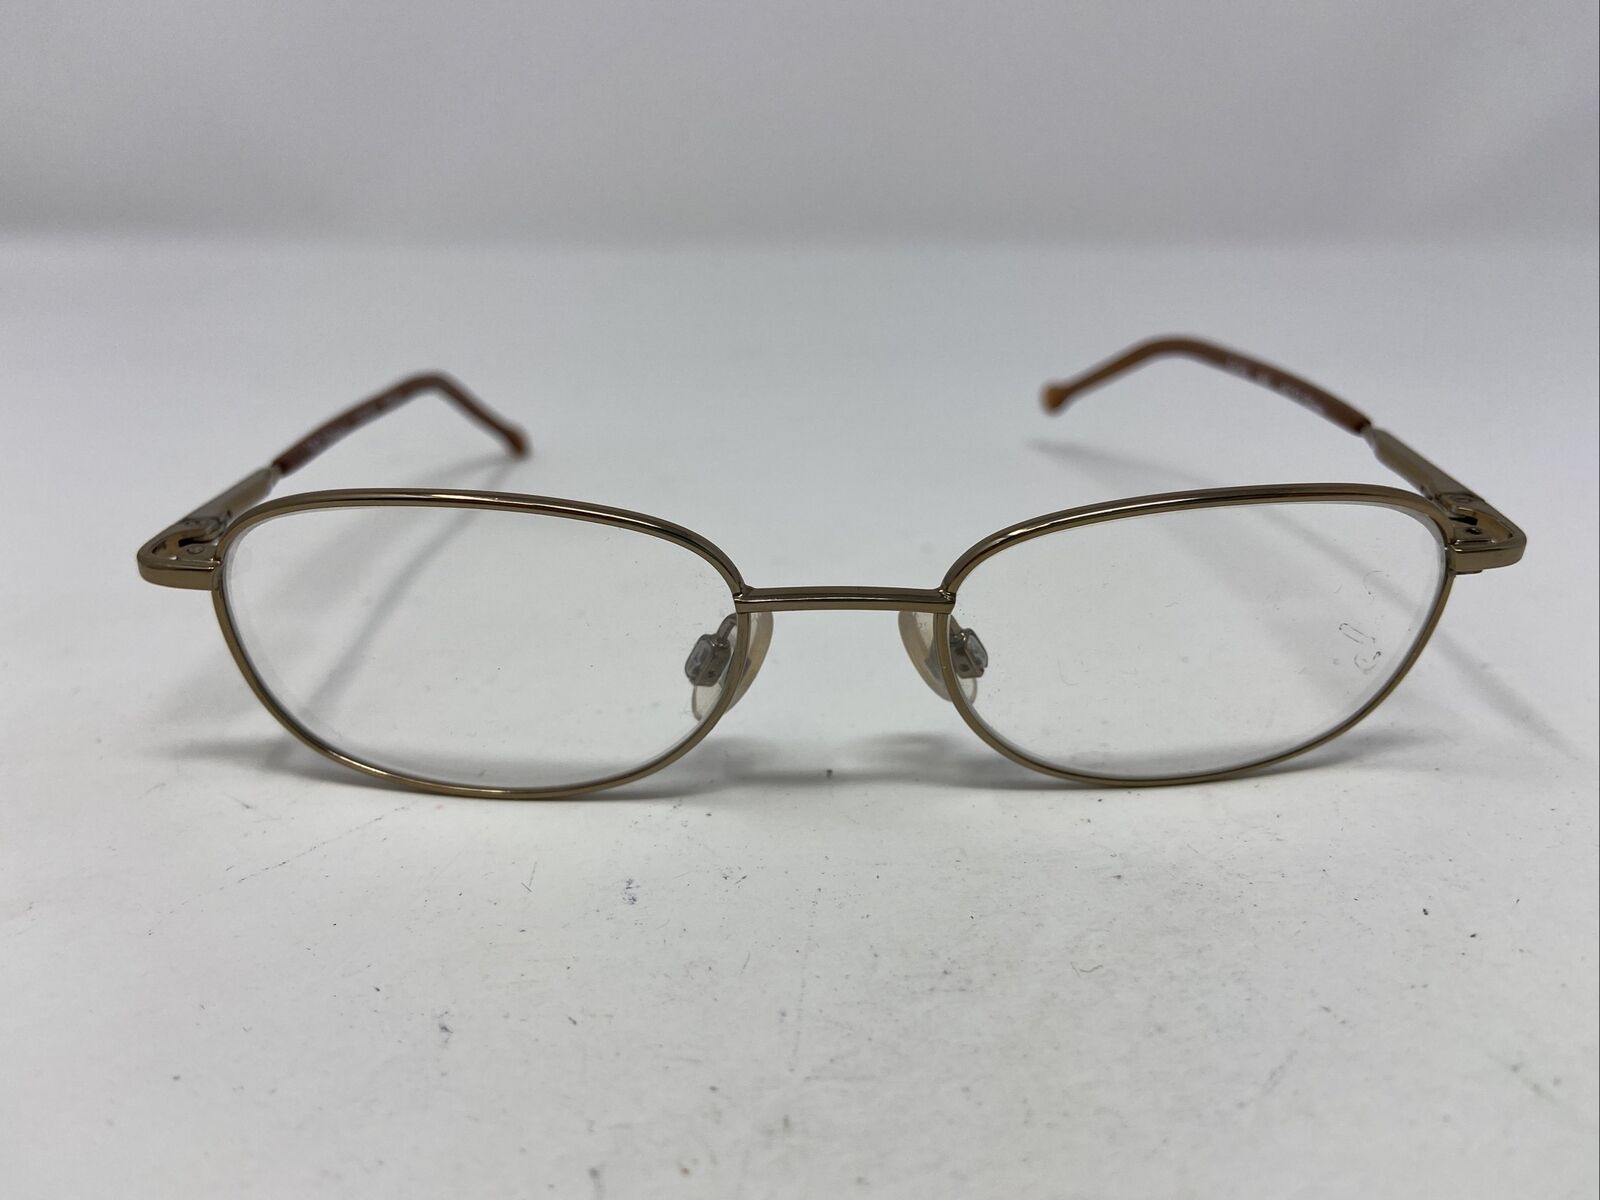 FAO Schwarz FAO19 906 45-17-130 Gold/Brown Metal Full Rim Eyeglasses Frame KX62